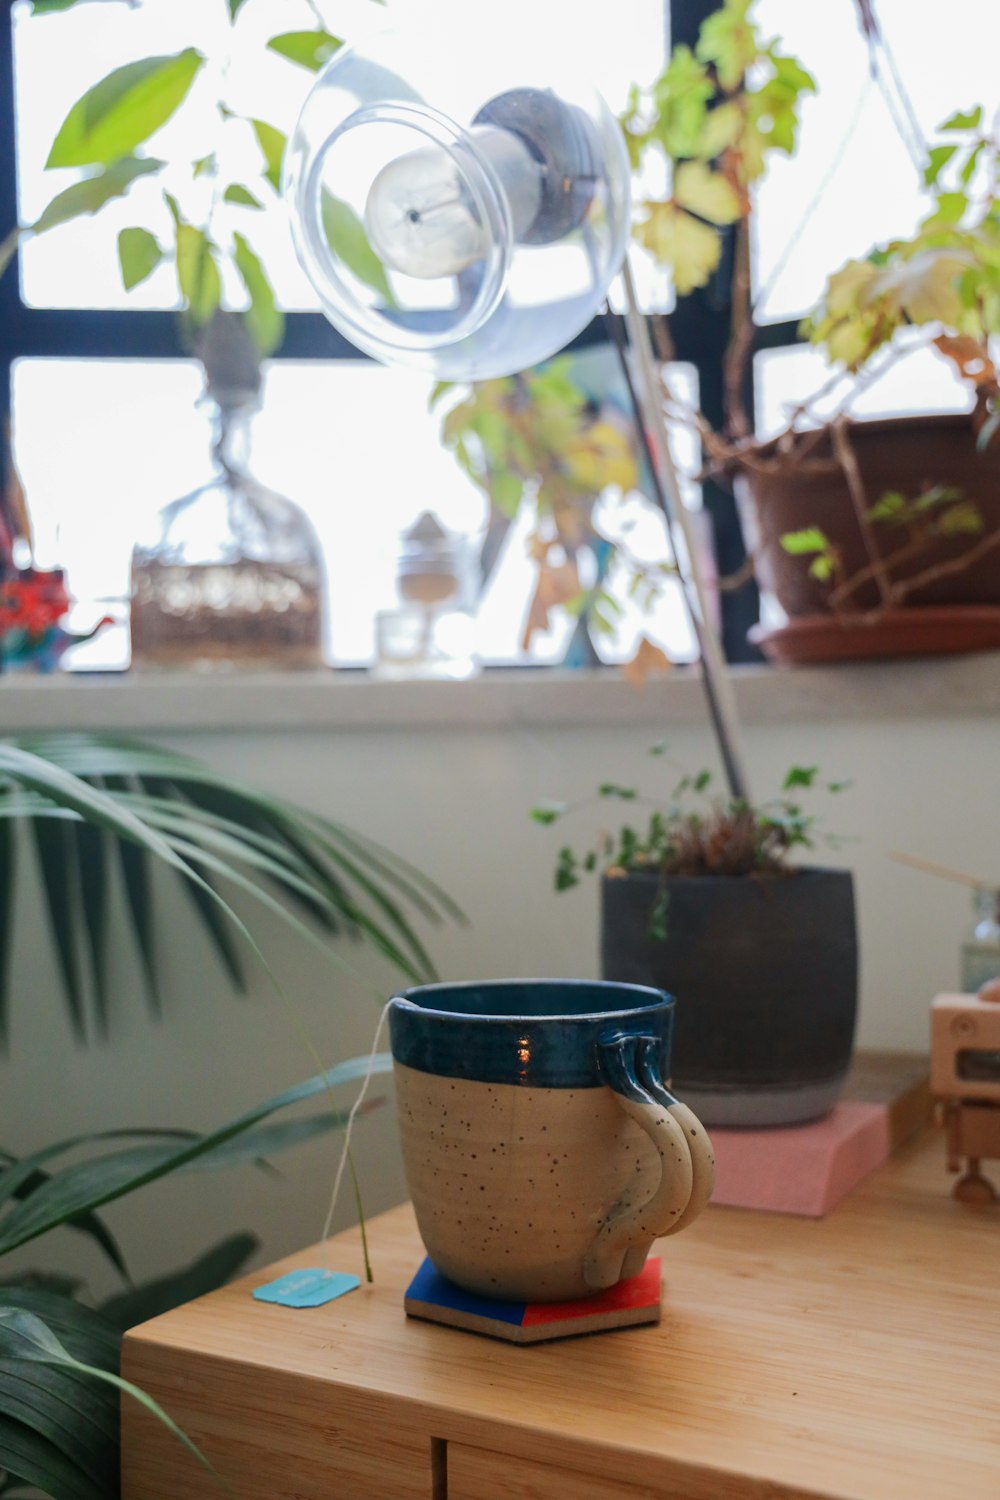 blue ceramic mug on brown wooden table